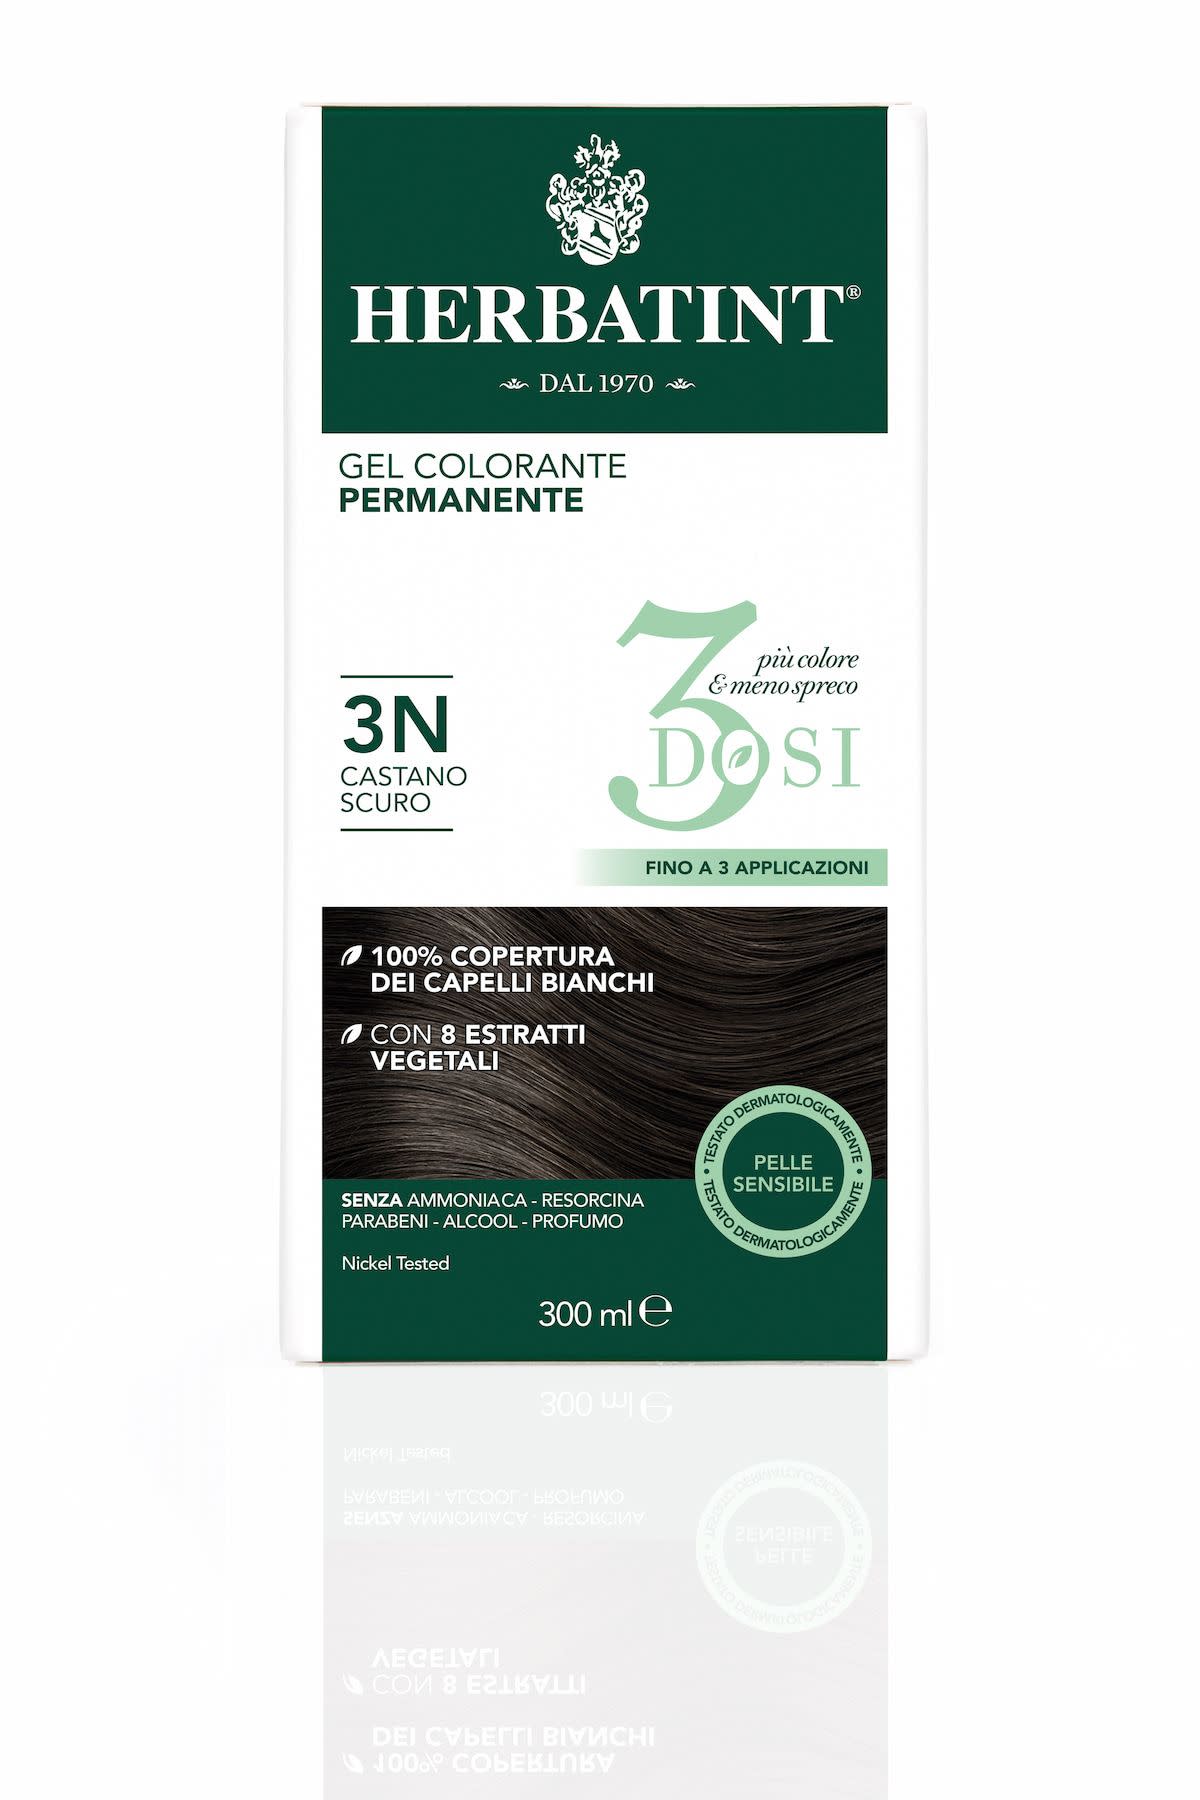 975906672 - Herbatint Gel colorante permanente 3 dosi 3N castano scuro 300ml - 4732908_3.jpg